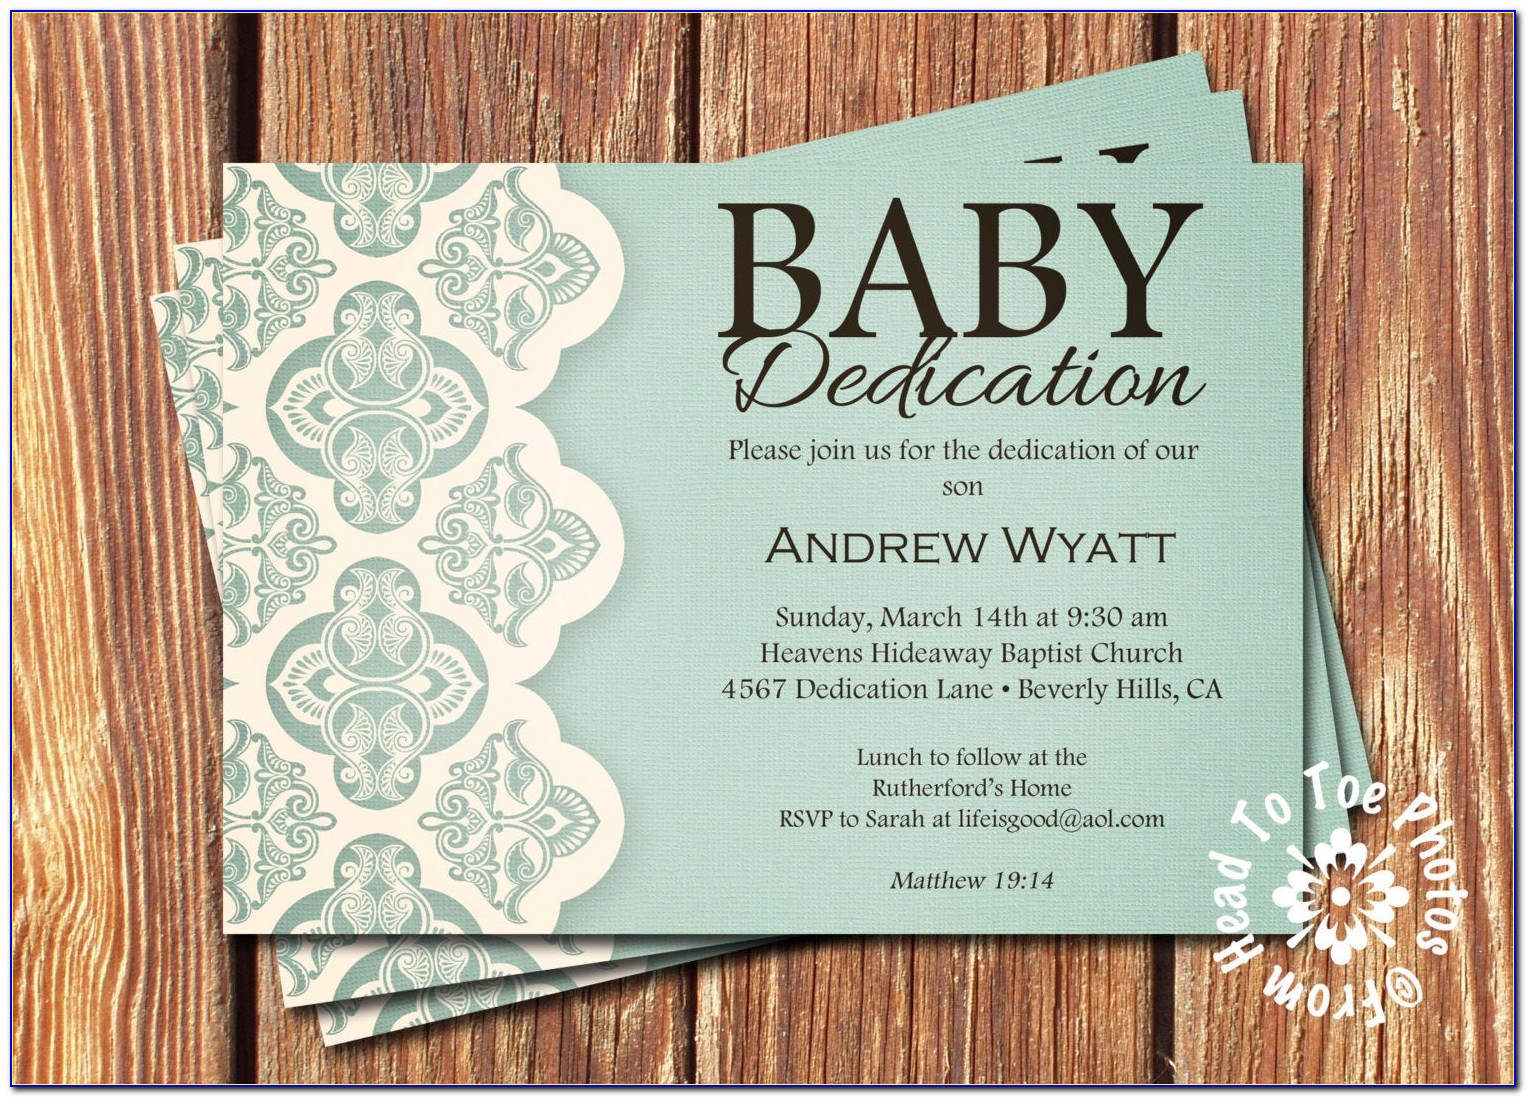 Baby Dedication Invitations Online